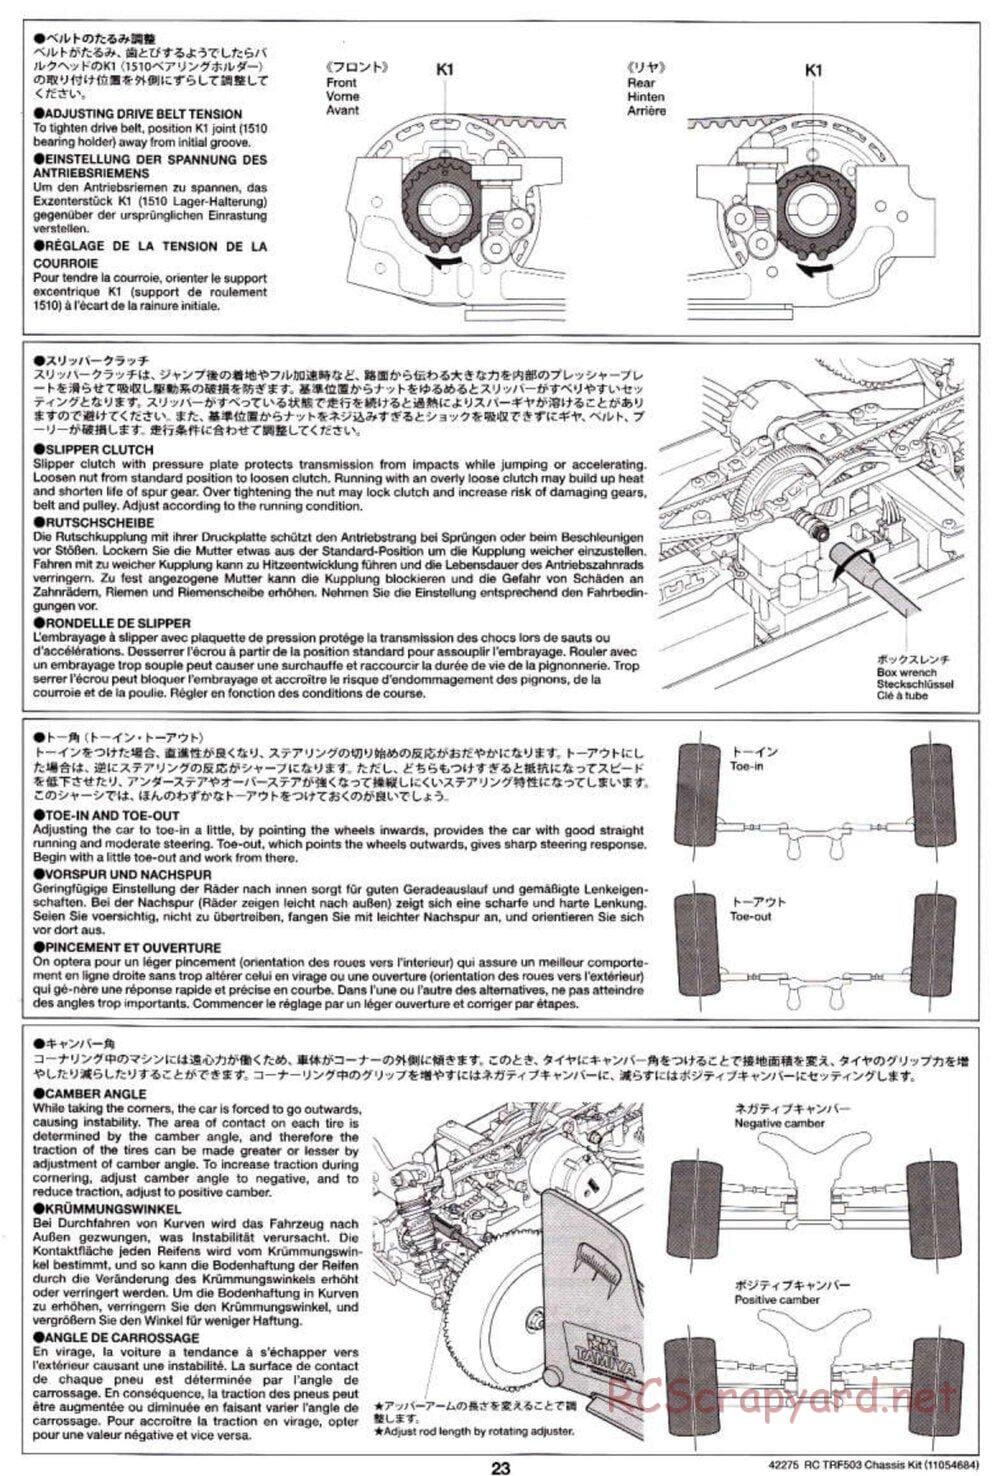 Tamiya - TRF503 Chassis - Manual - Page 23